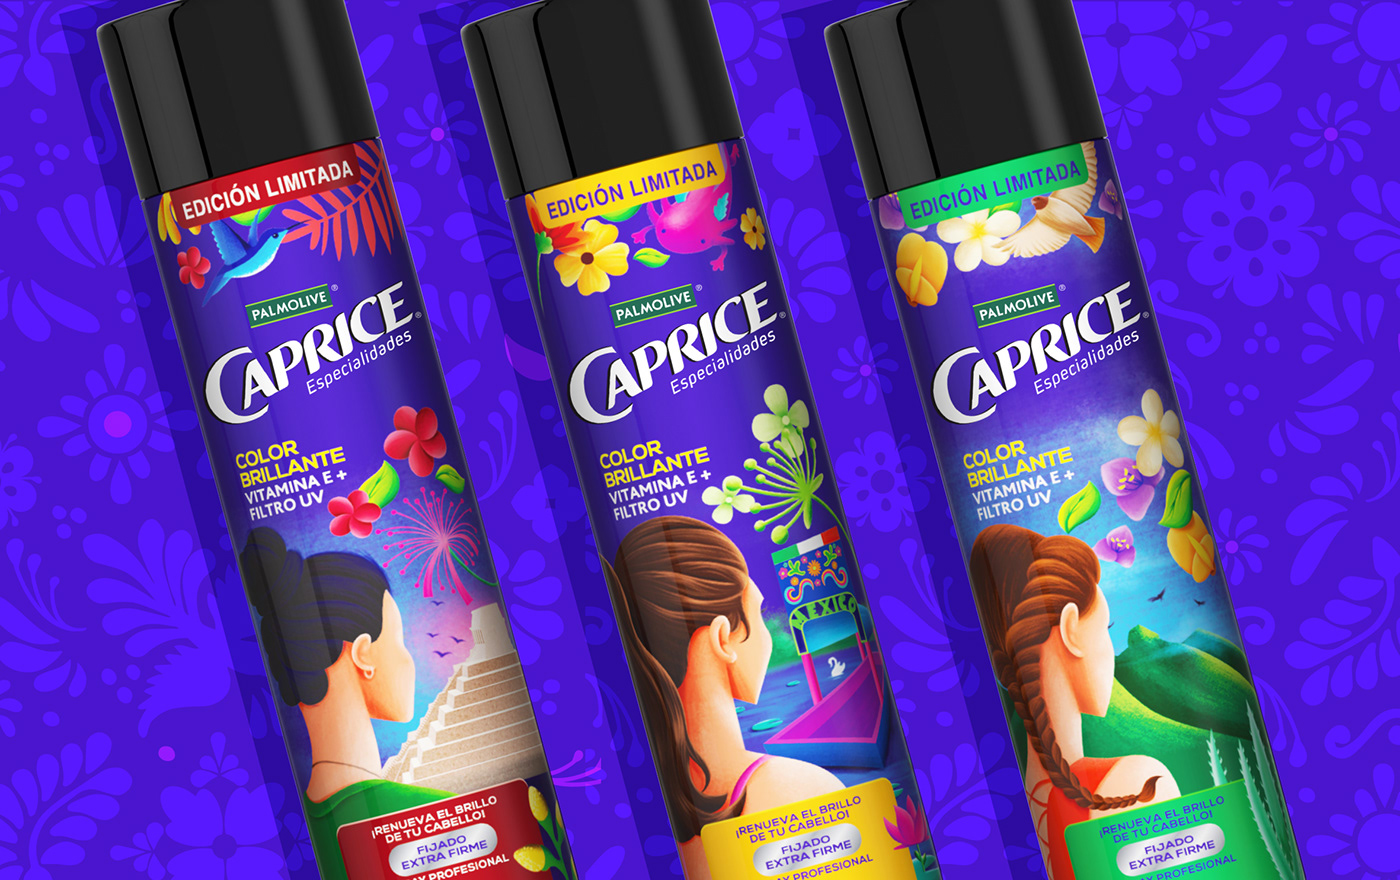 caprice empaque mexico Packaging packagingdesign Palmolive shampoo special edition